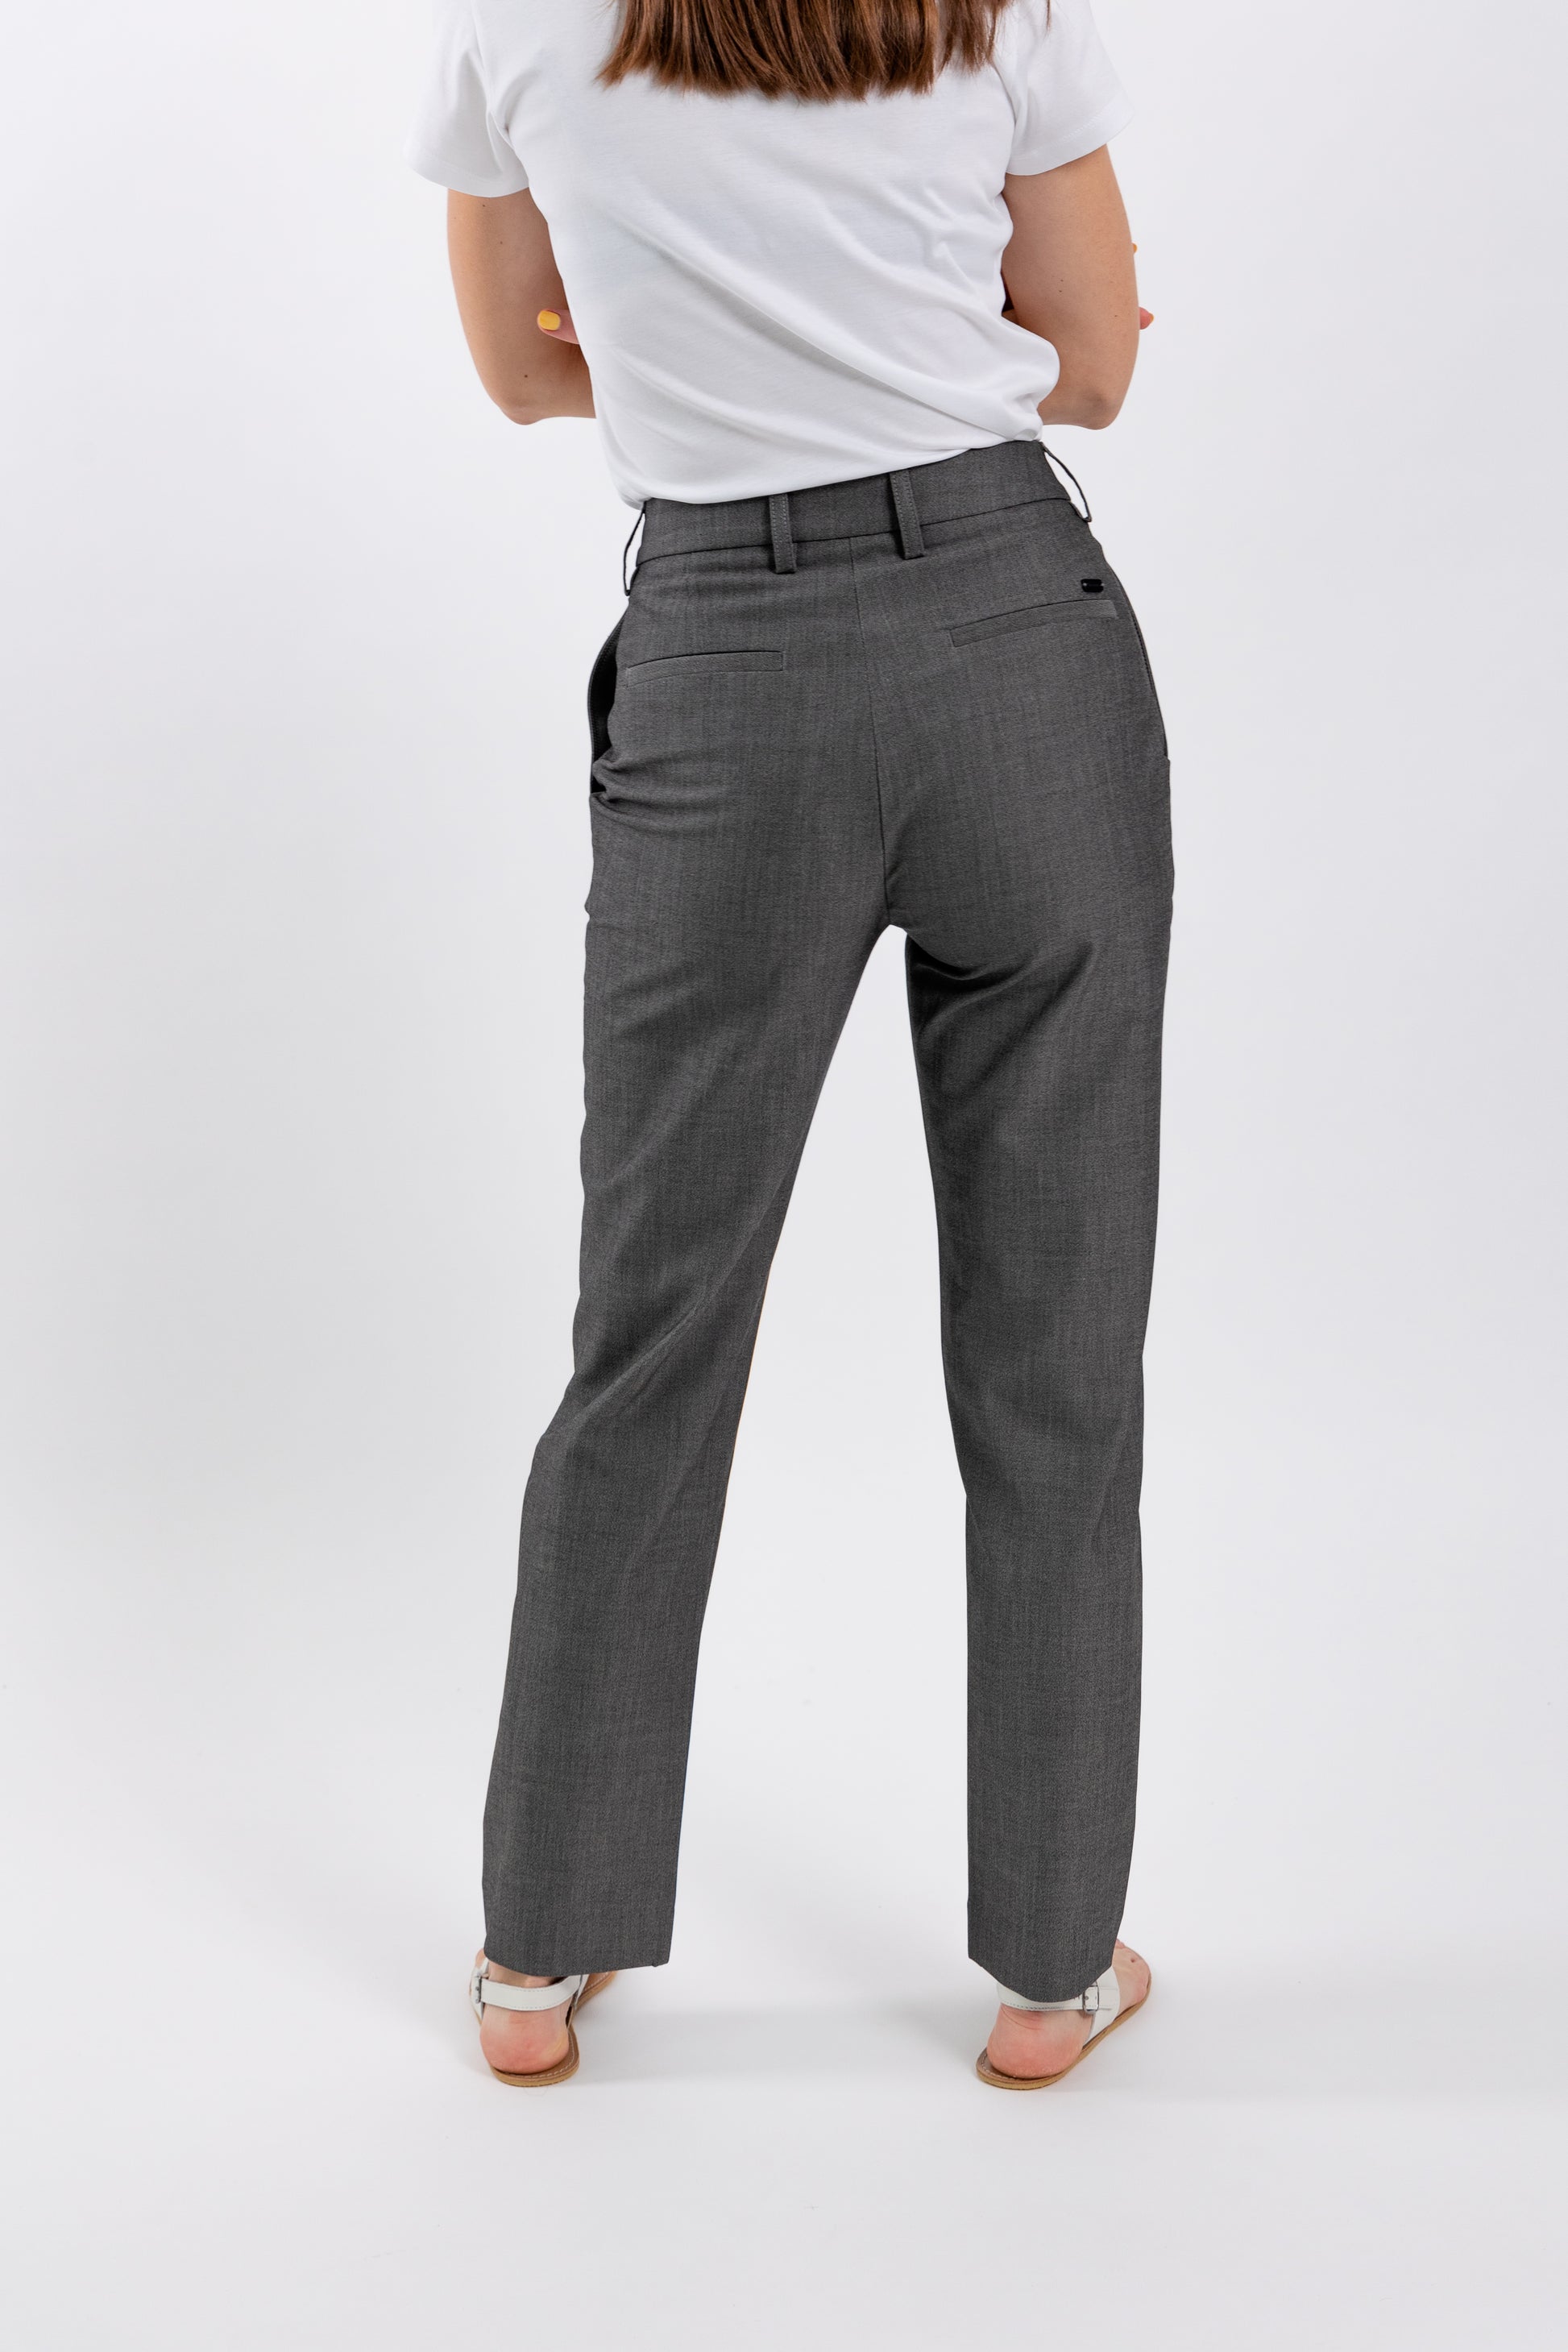 Women's Pants Be Lenka Essentials - Grey 2 OzBarefoot Australia